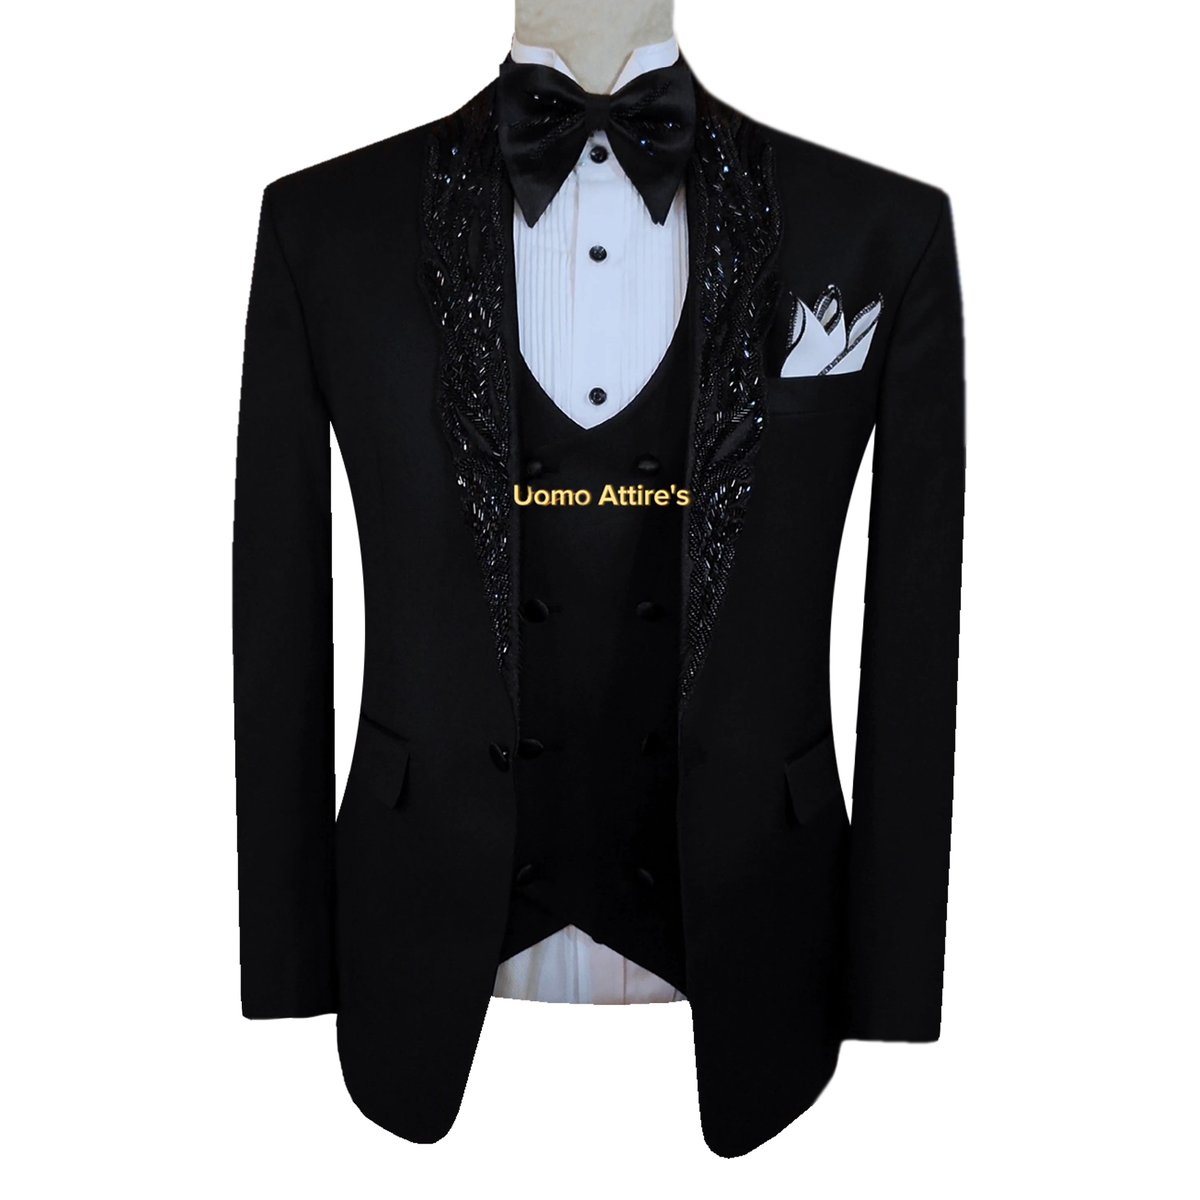 Dapper sophistication meets handcrafted elegance in our Black Designer Tuxedo Suit.

👉 uomoattire.com☎️+92300-7668666

#DesignerStyle #WeddingReady #RedCarpetElegance #GroomsmenFashion #ItalianWool #DapperGents #HandcraftedLuxury #TuxedoChic #ElegancePersonified